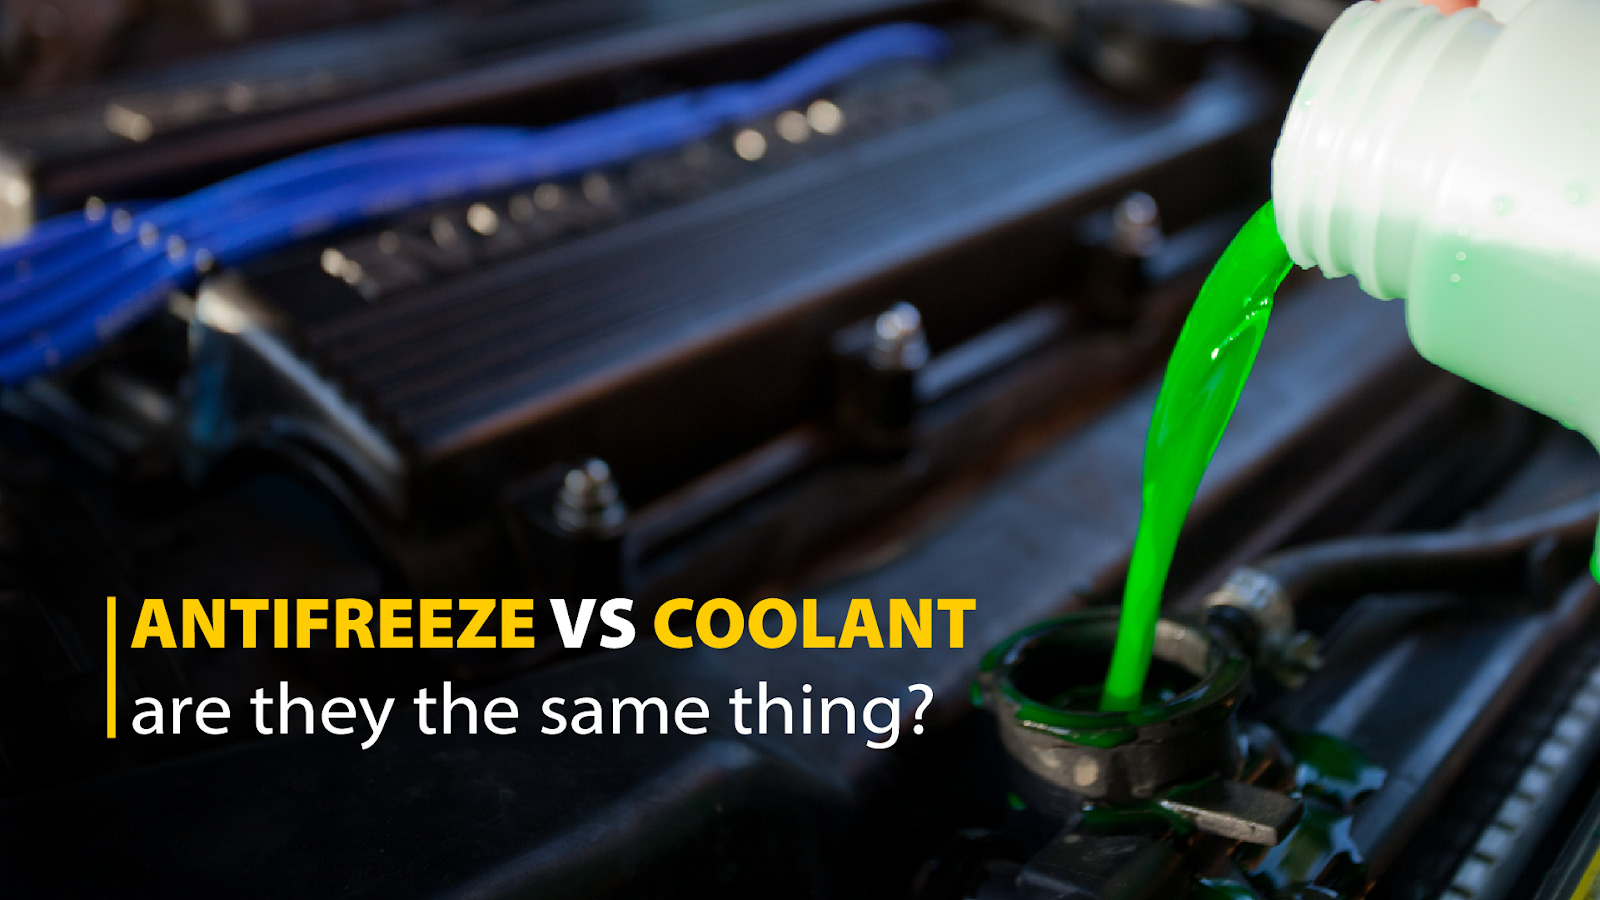 yellow coolant vs green coolant